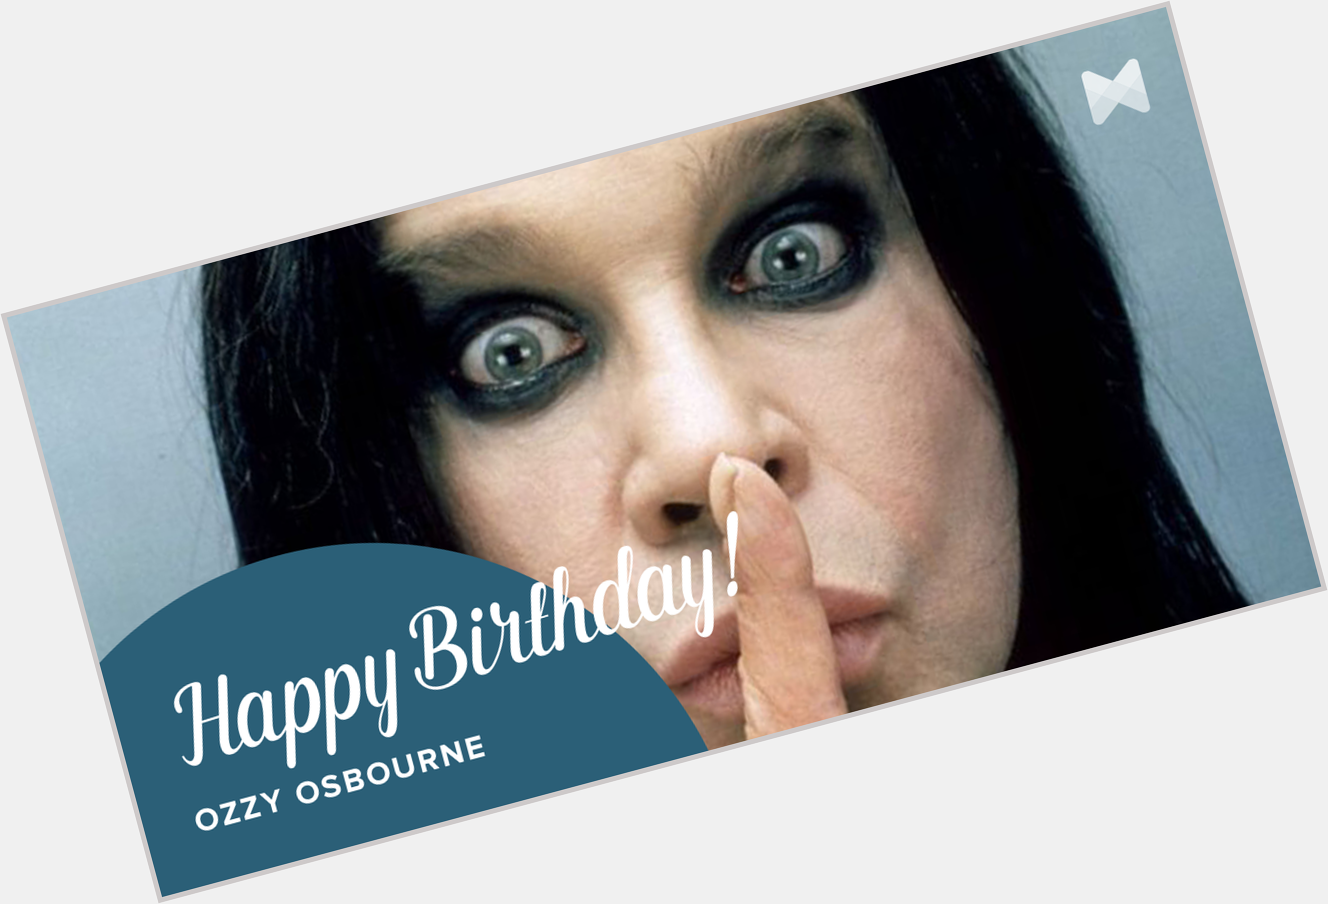 Today is Ozzy Osbourne\s birthday. 
Wishing the Prince of Darkness a very Happy Birthday ! 